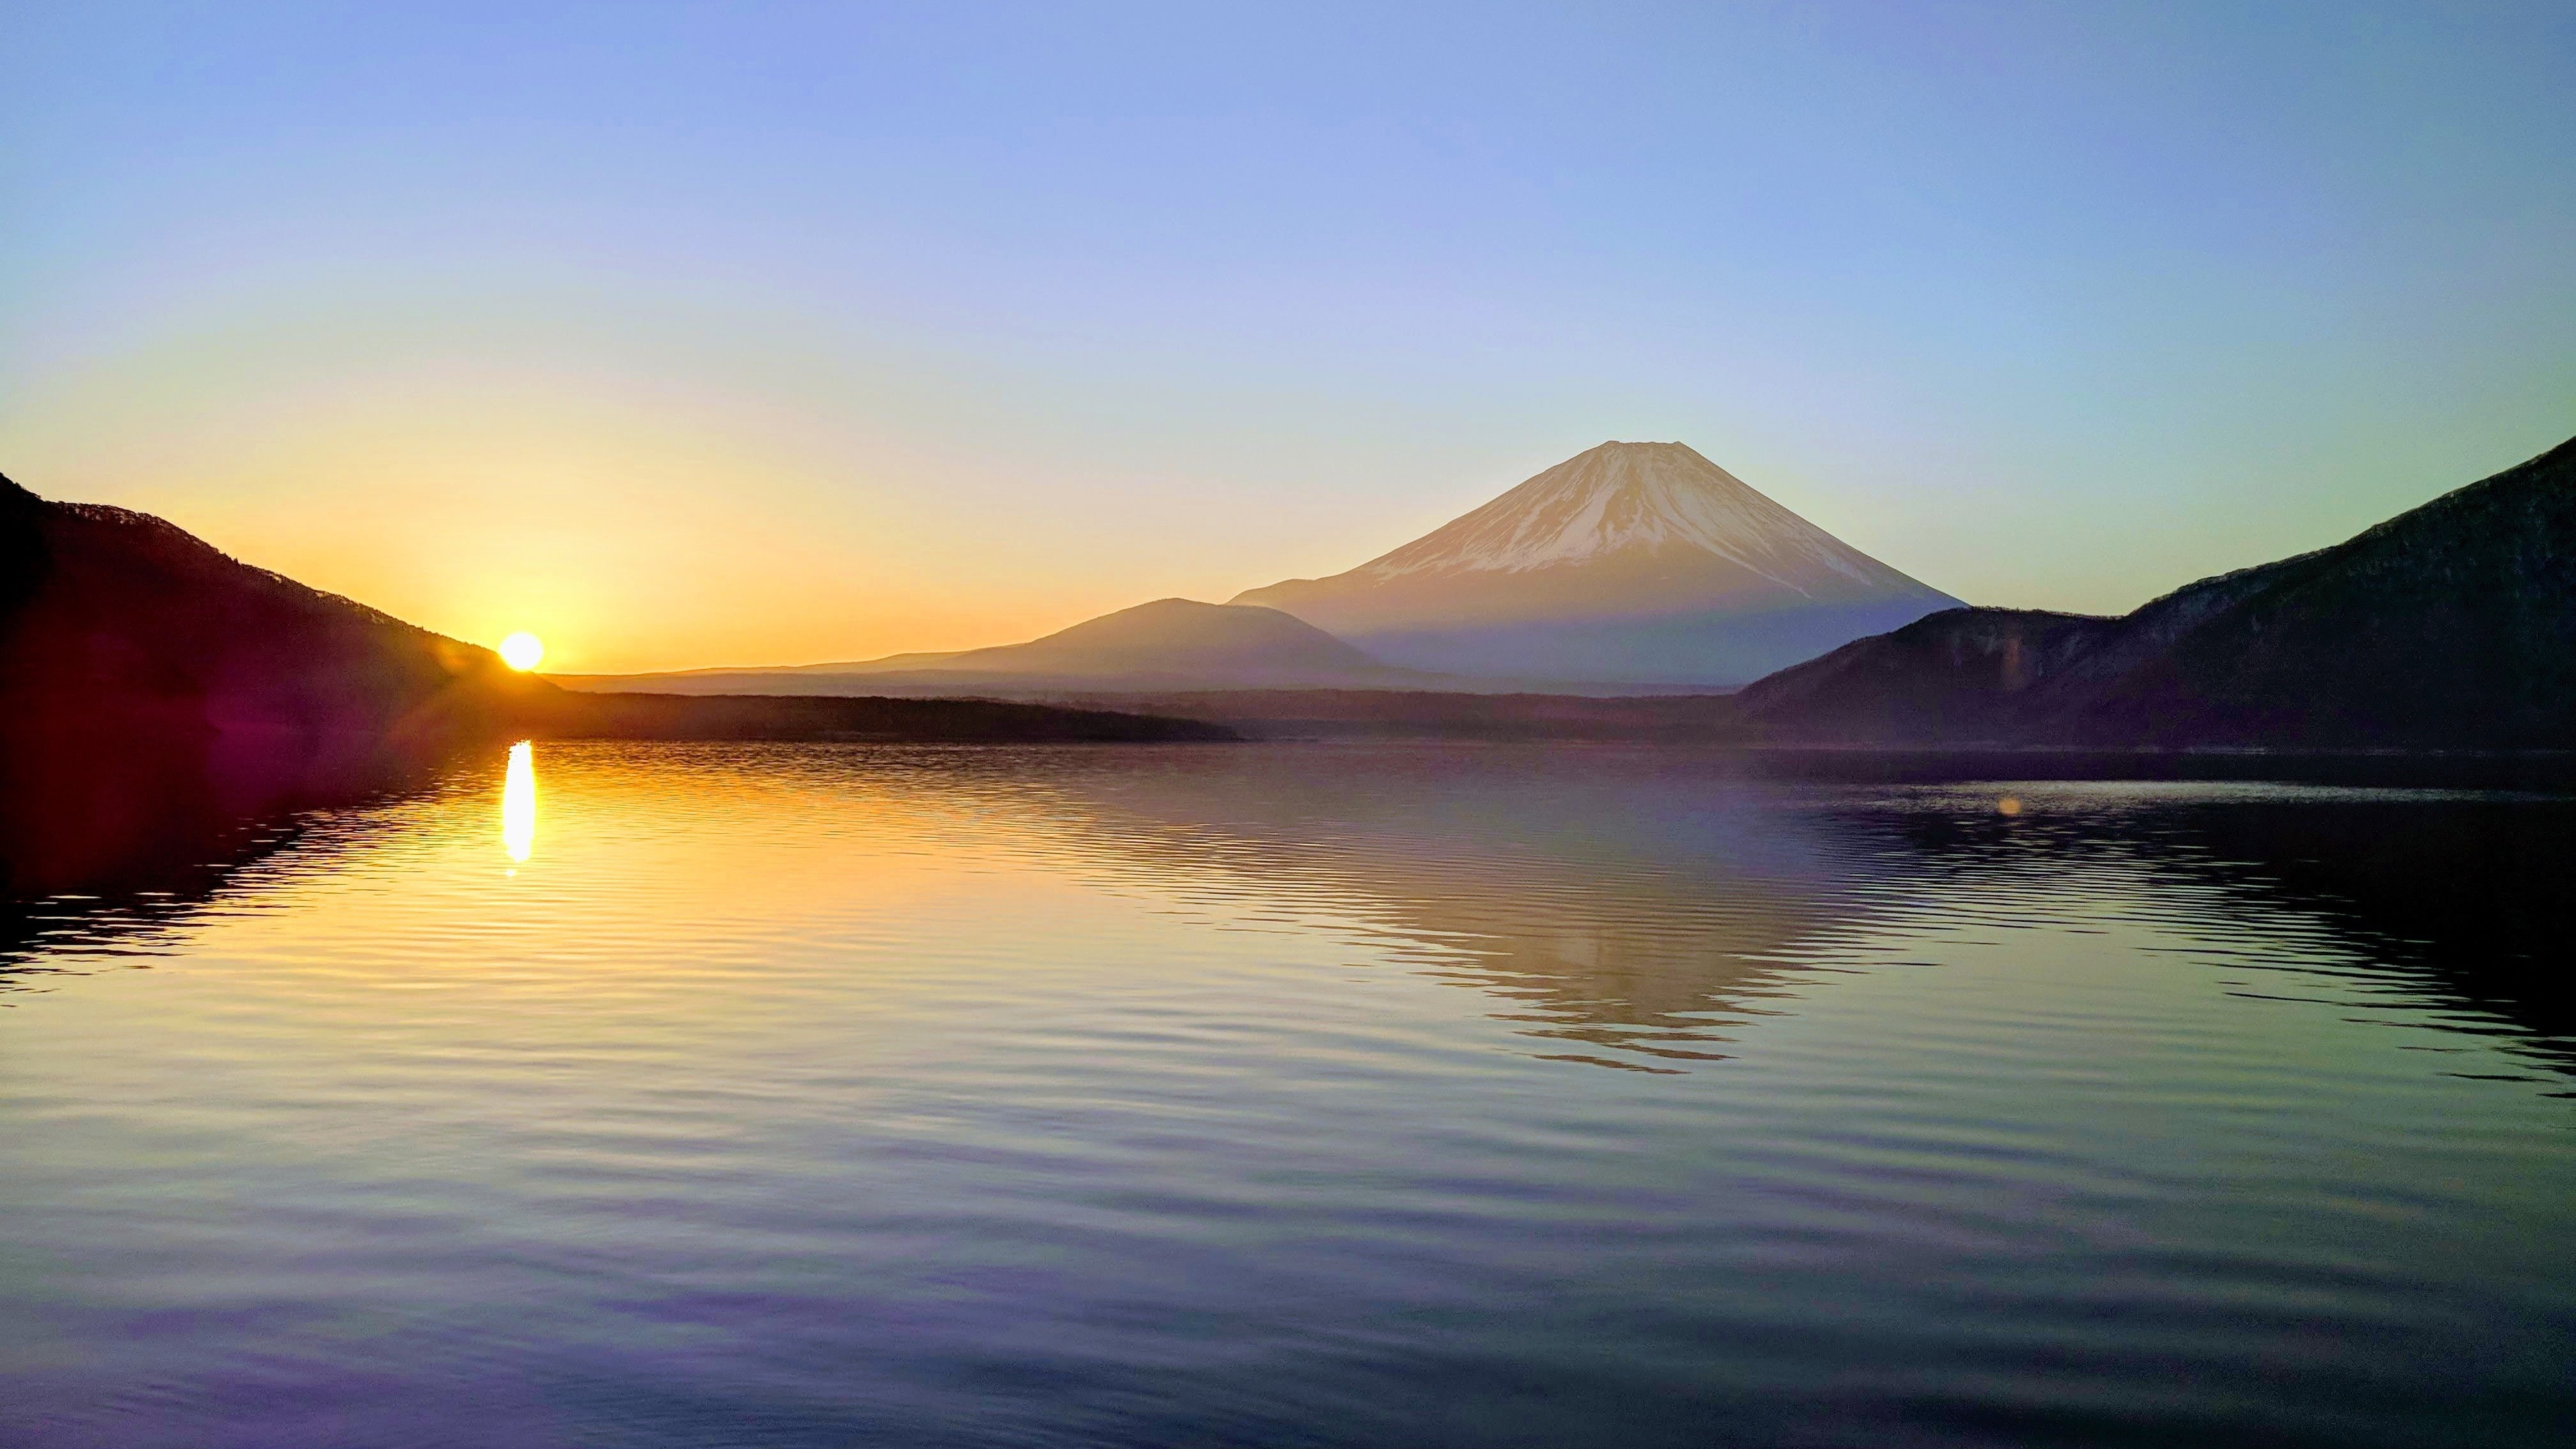 3840x2160 Mount Fuji 4k 4k HD 4k Wallpapers, Images, Backgrounds